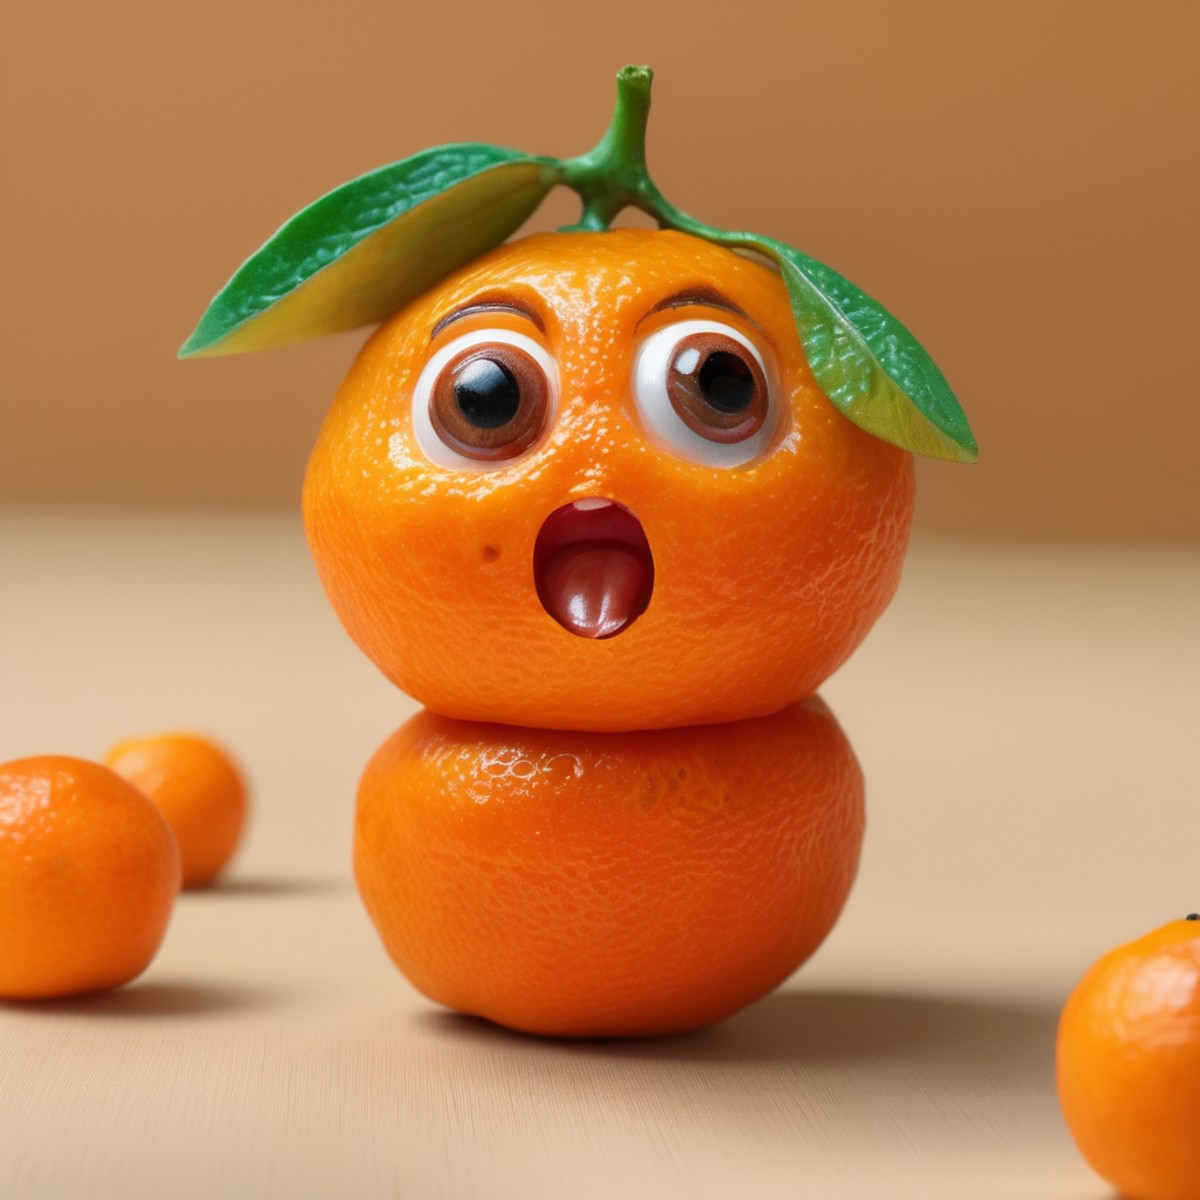 Surprised Orange, Wide-eyed Expression, Vibrant Orange Palette, Bumpy Texture, Miniature Scale, CtFruitsRedmAF, <lora:CtFr...